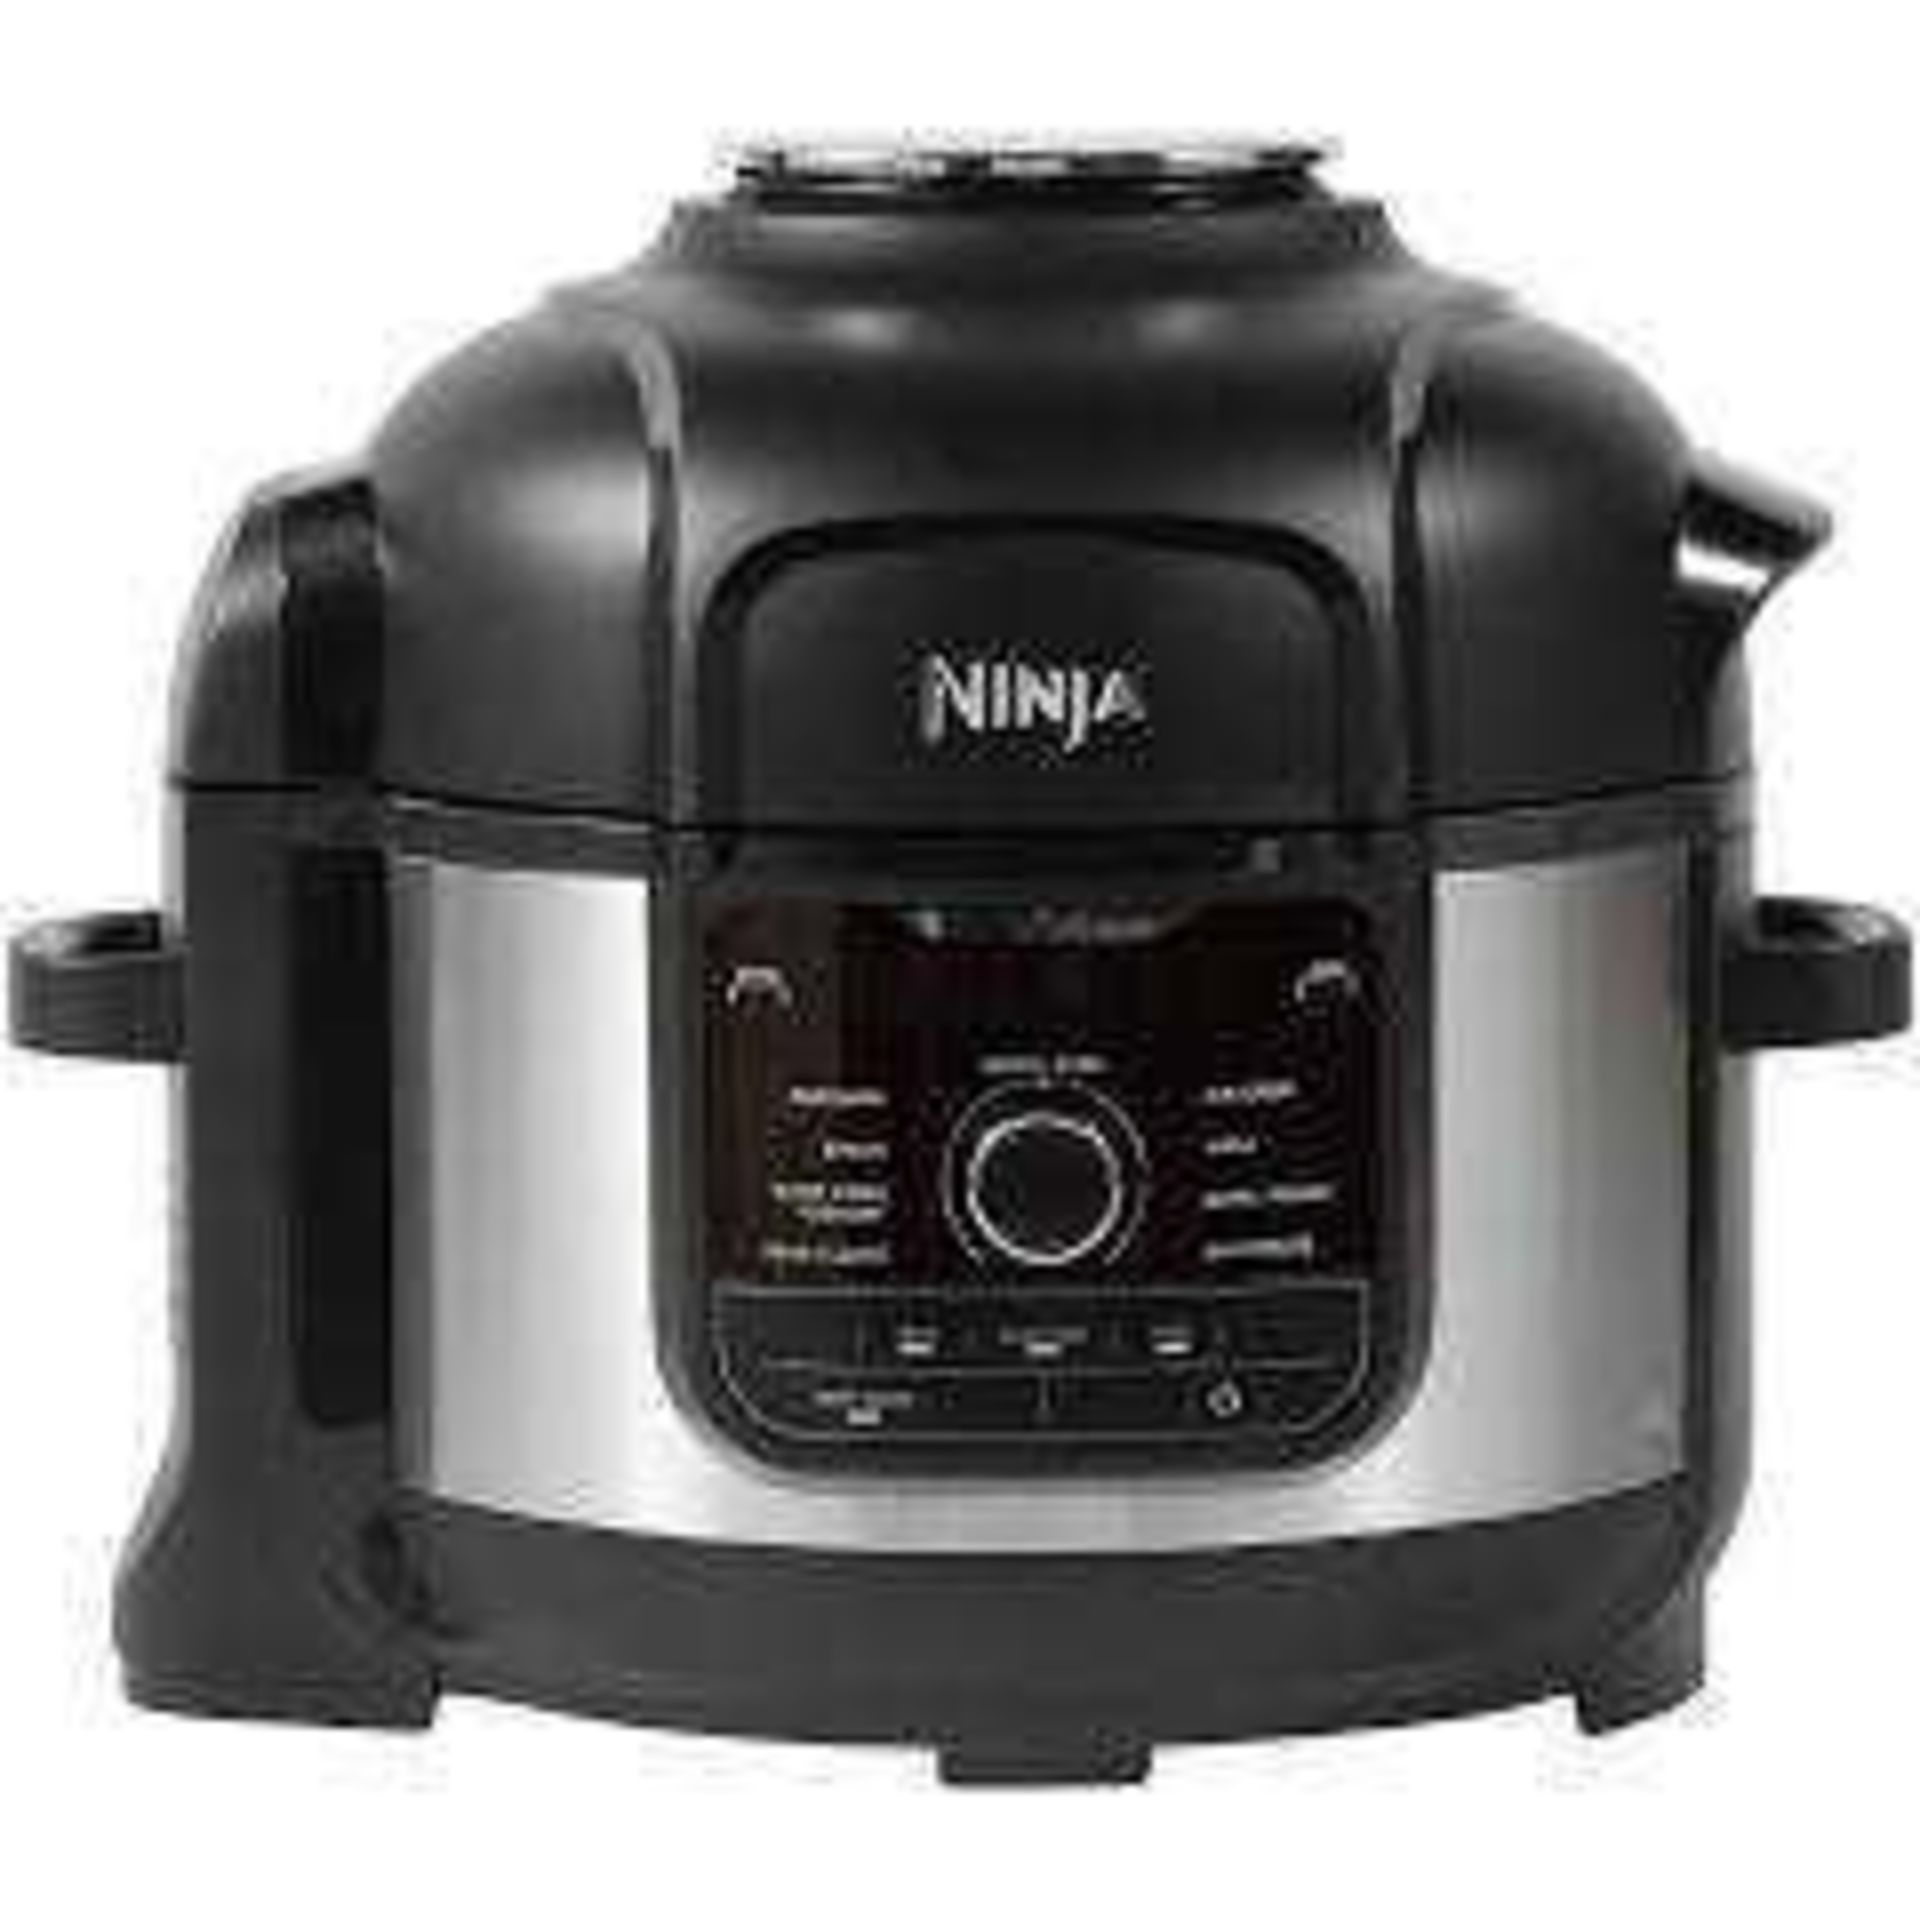 RRP £200 Unboxed Ninja Foodi 7.5L Multi Cooker 9 Ways To Cook